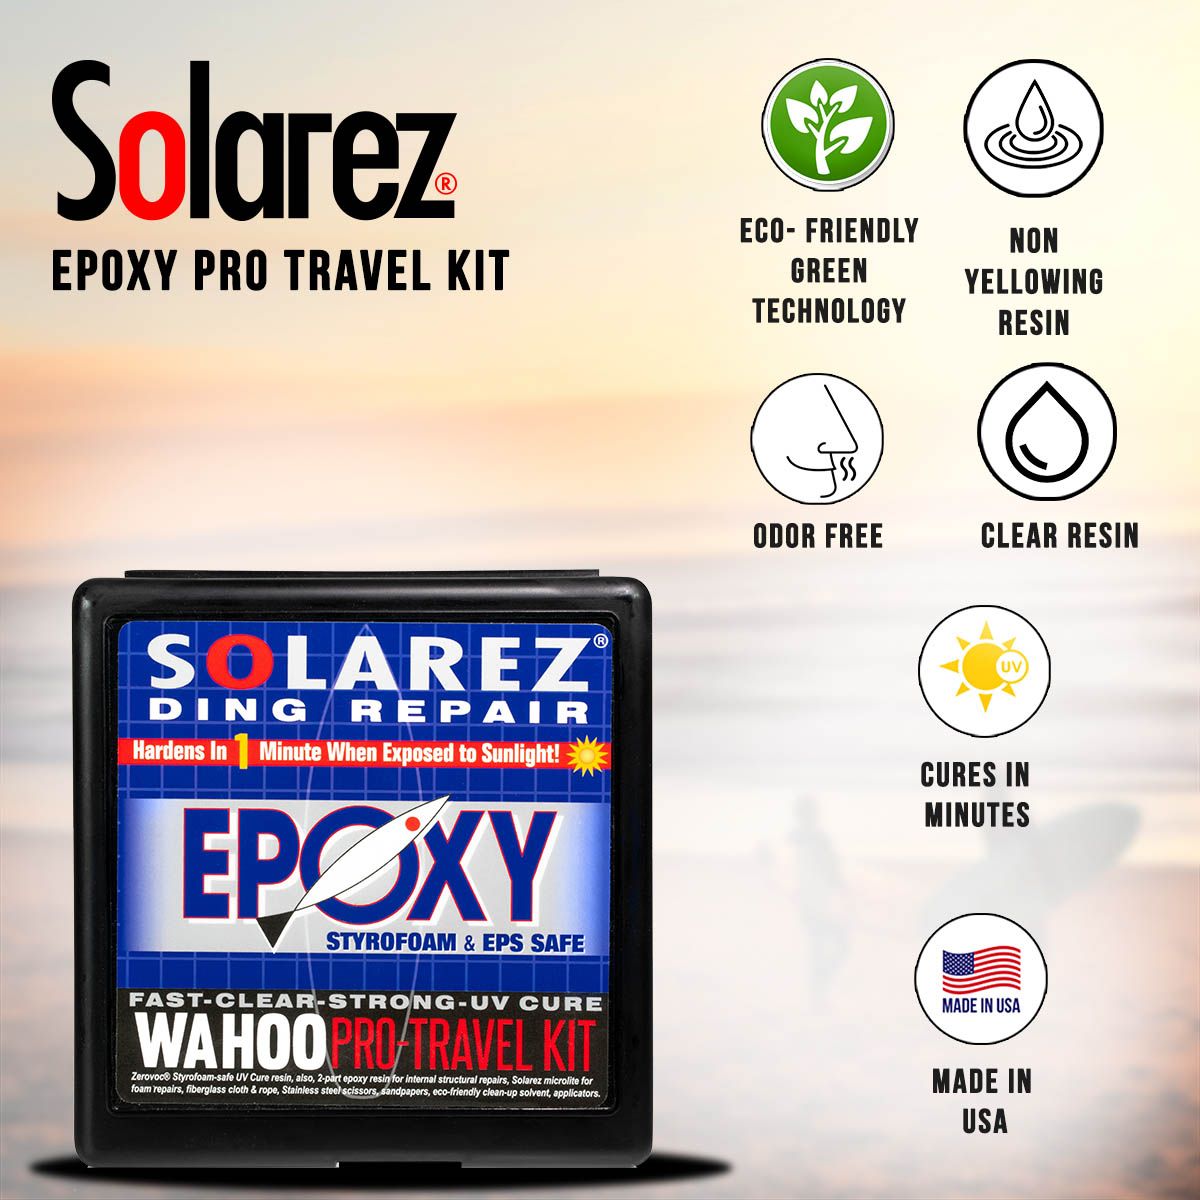 Solarez Epoxy Pro Travel Kit